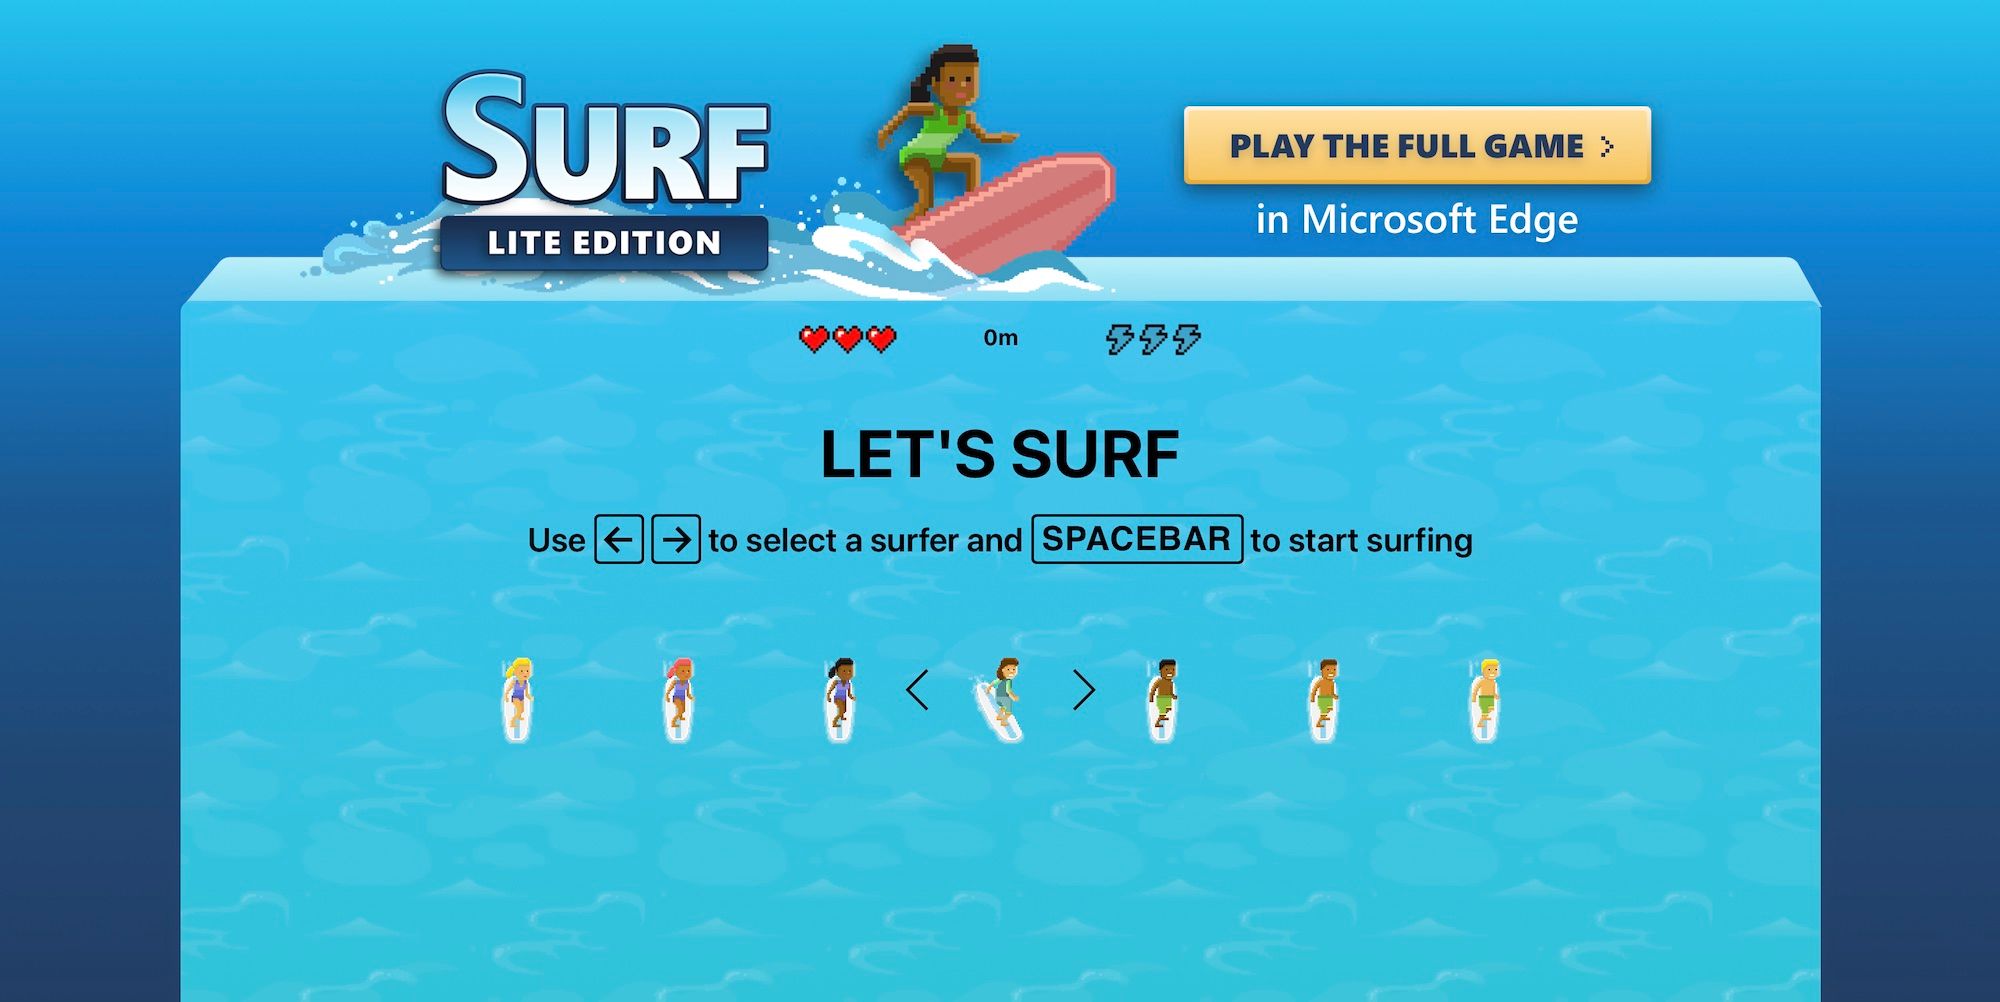 Microsoft Edge Surf Lite Edition